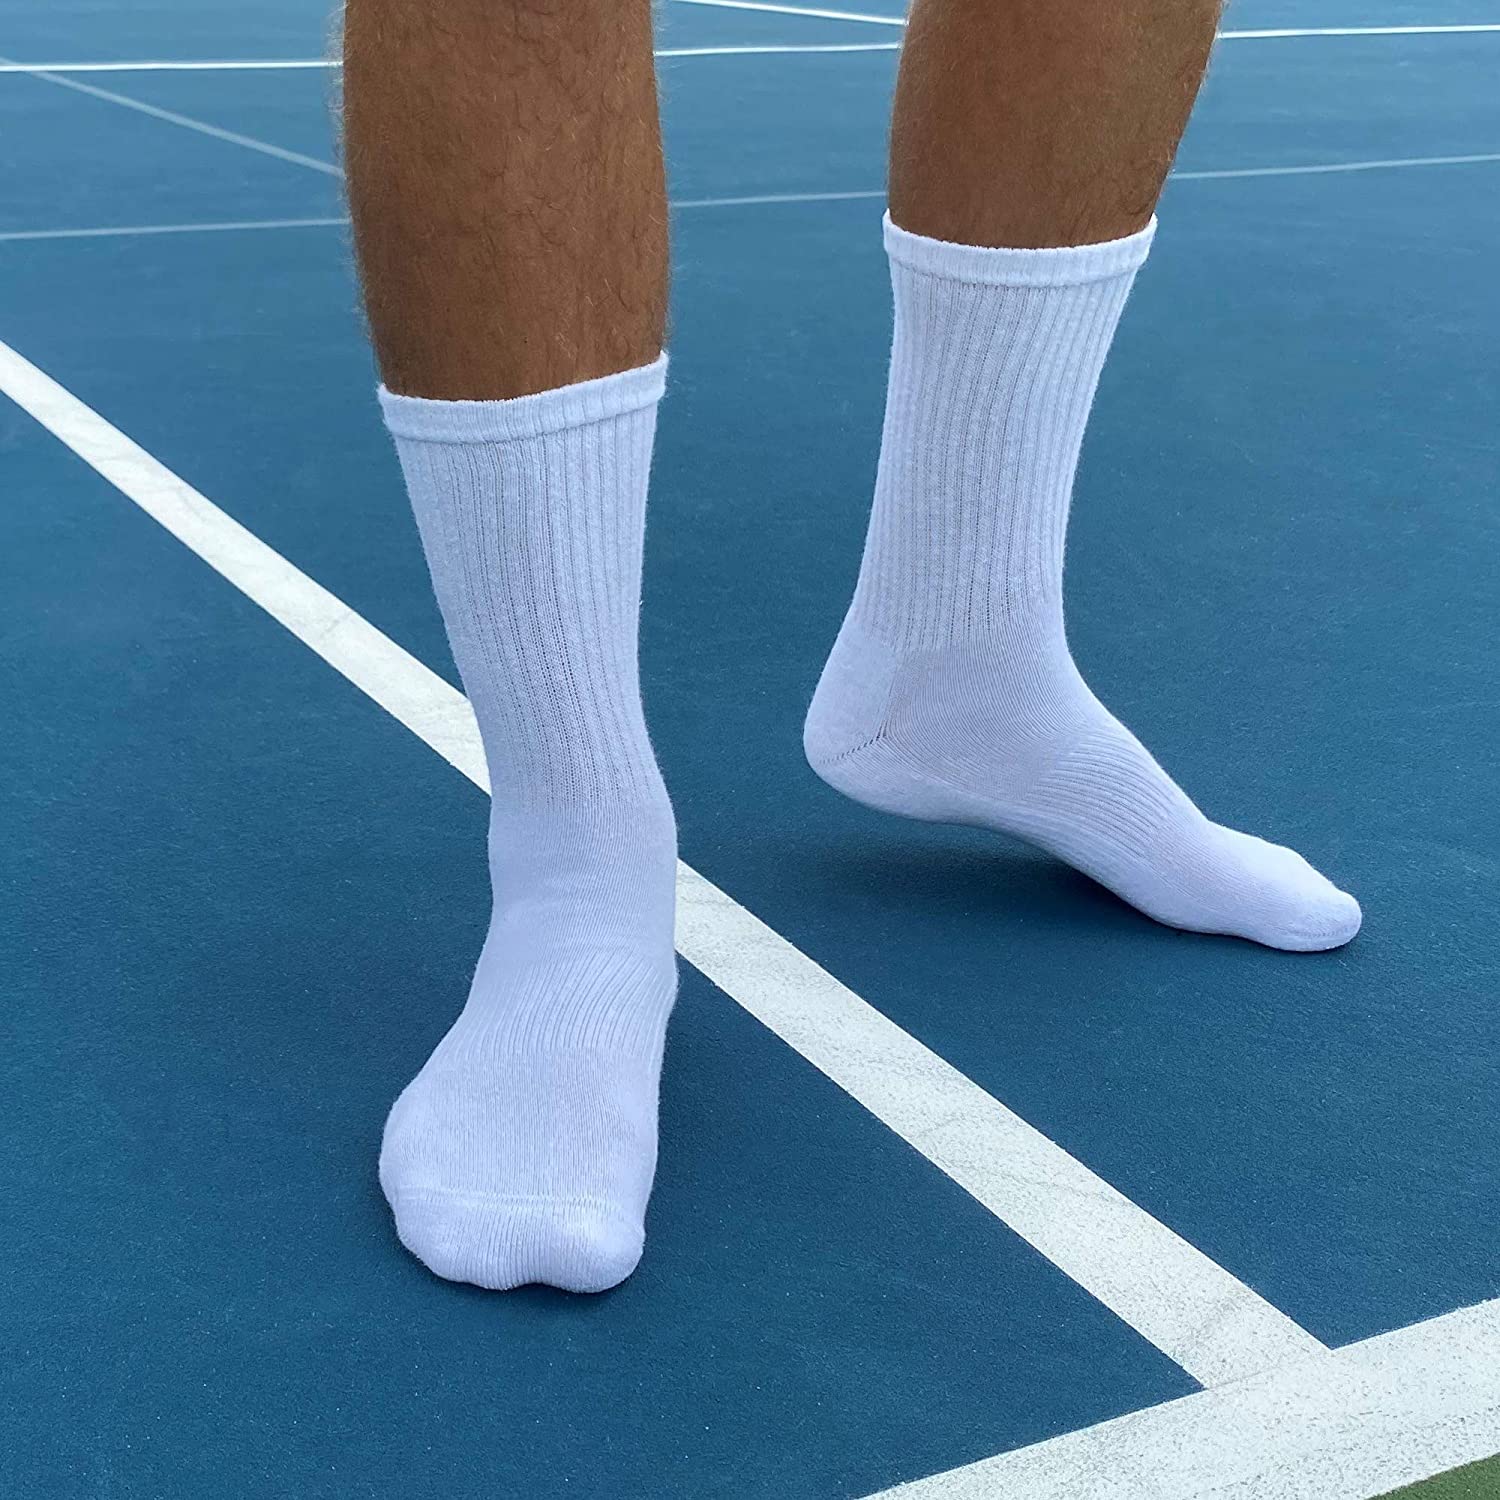 Gildan Men S Cotton Crew Socks 10 Pair White Size 6 0 Ywls Ebay